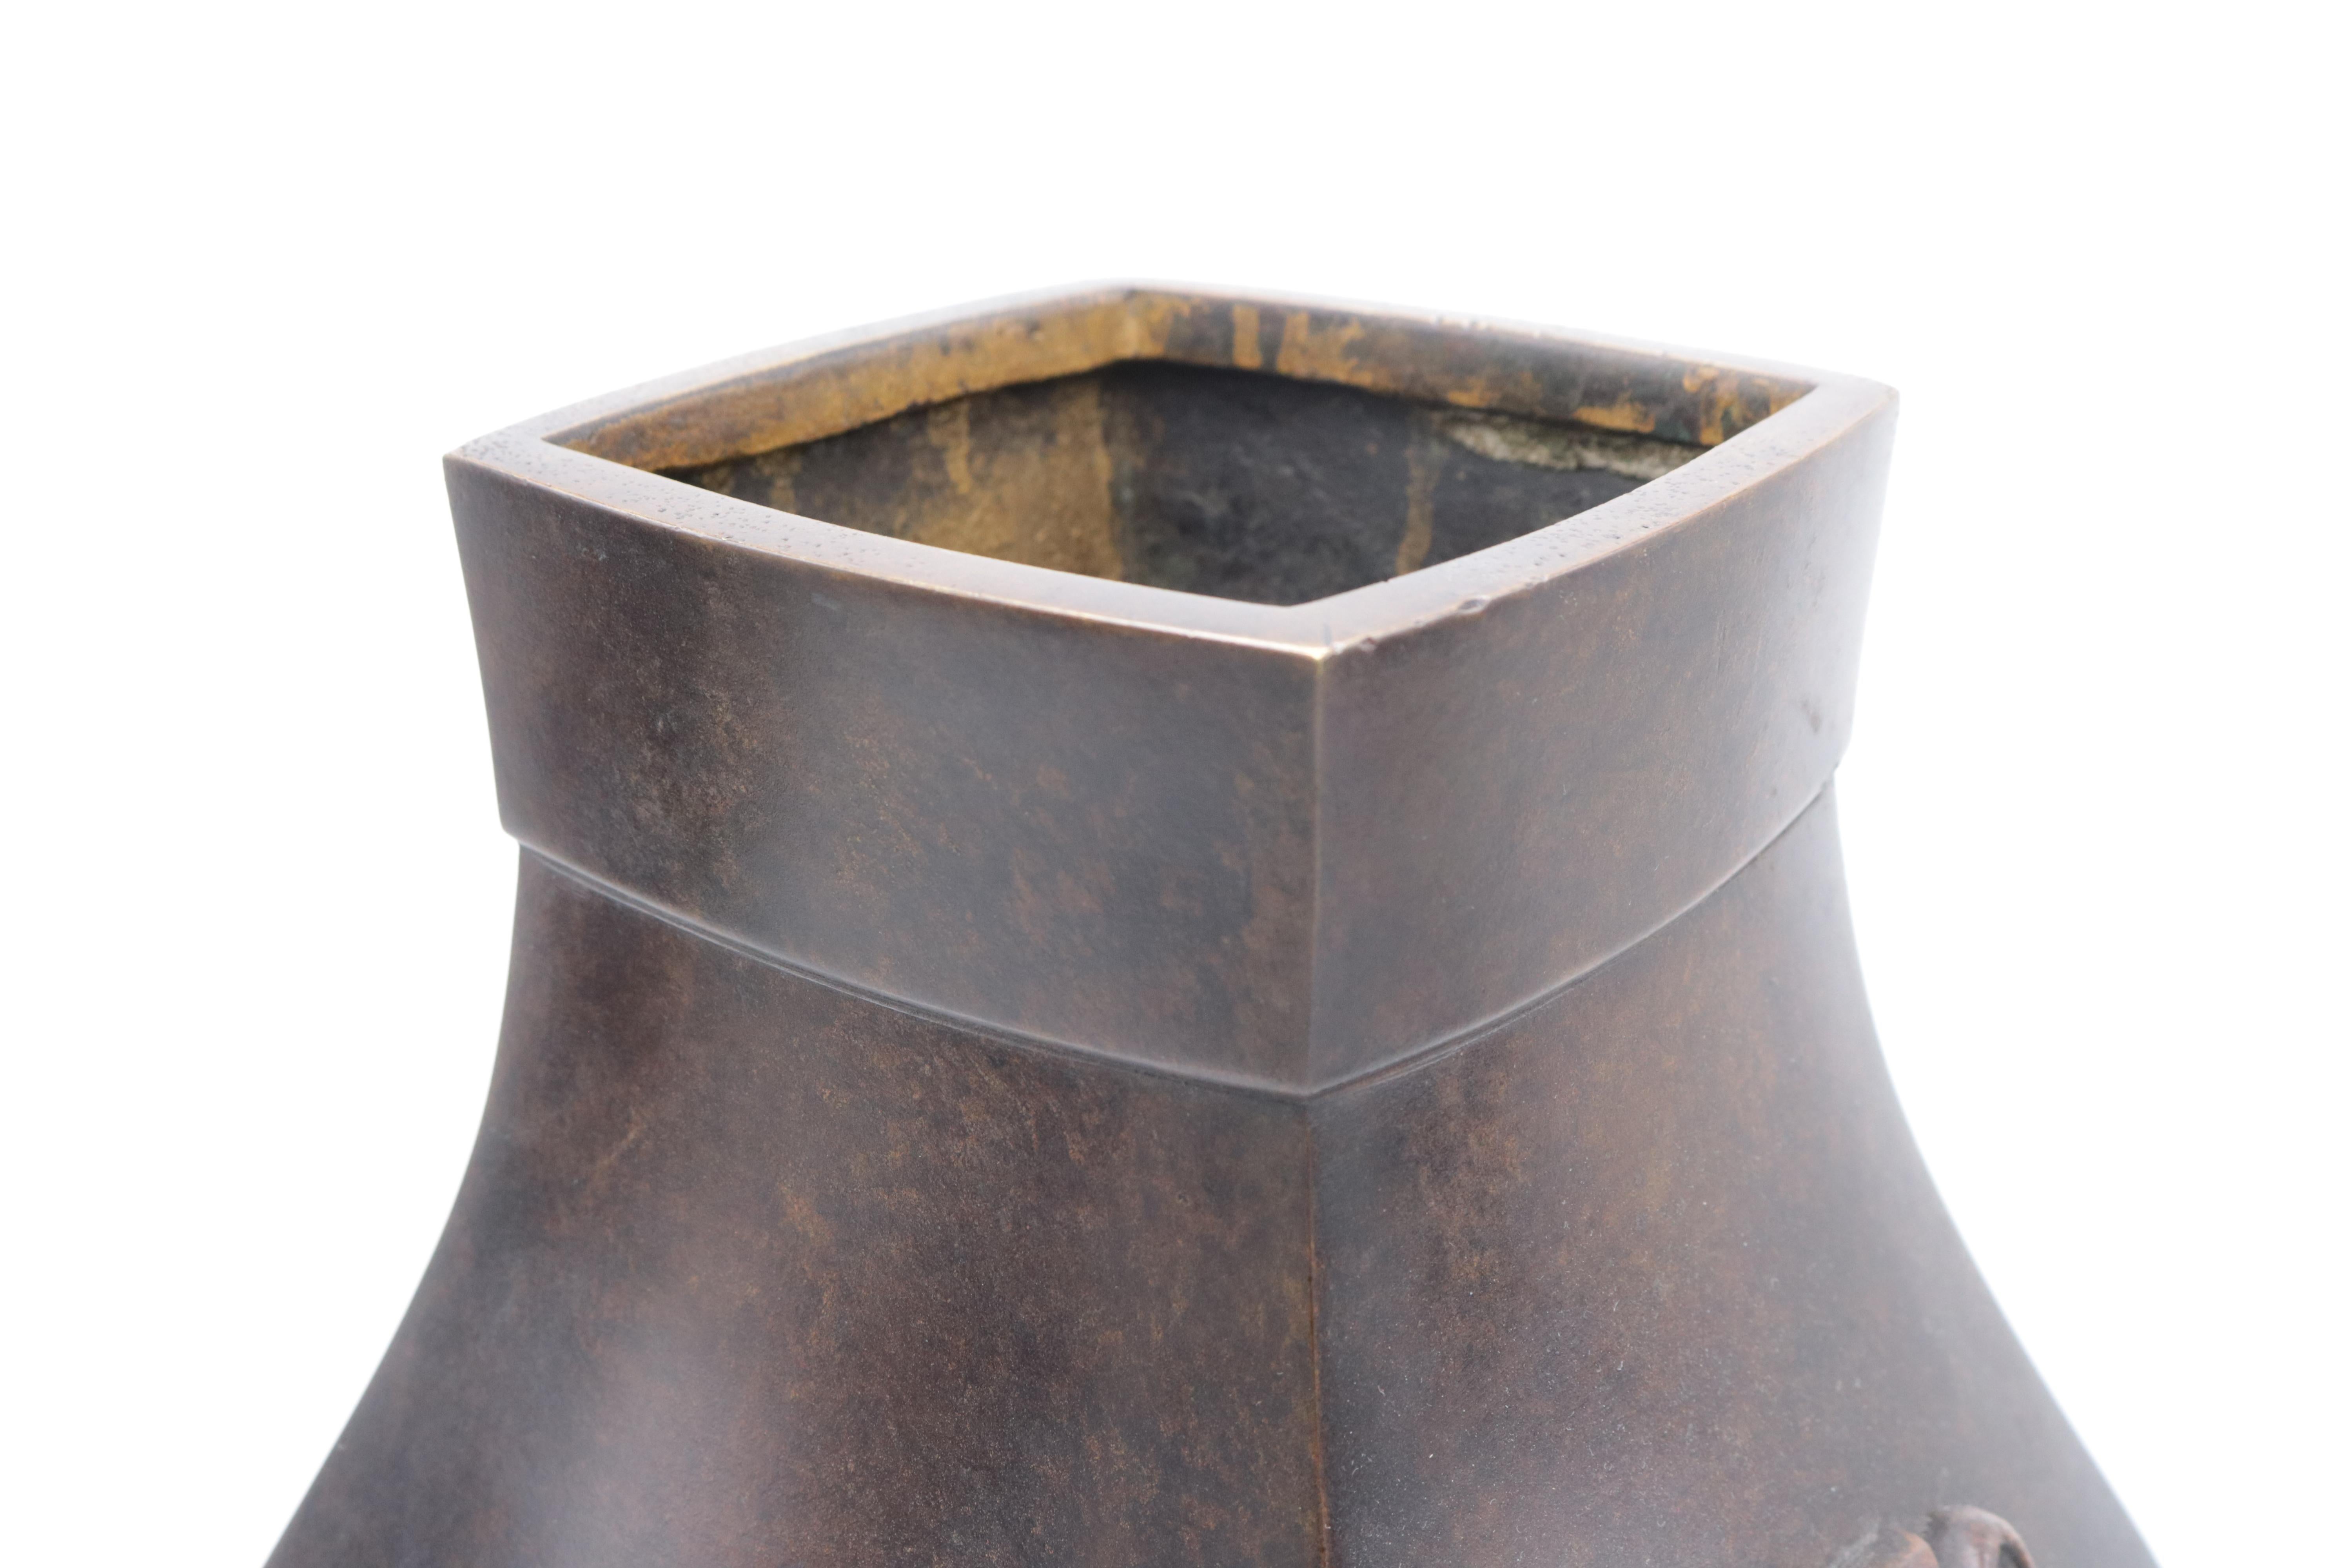 Large Meiji period patinated Japanese bronze vase with decorative handles.